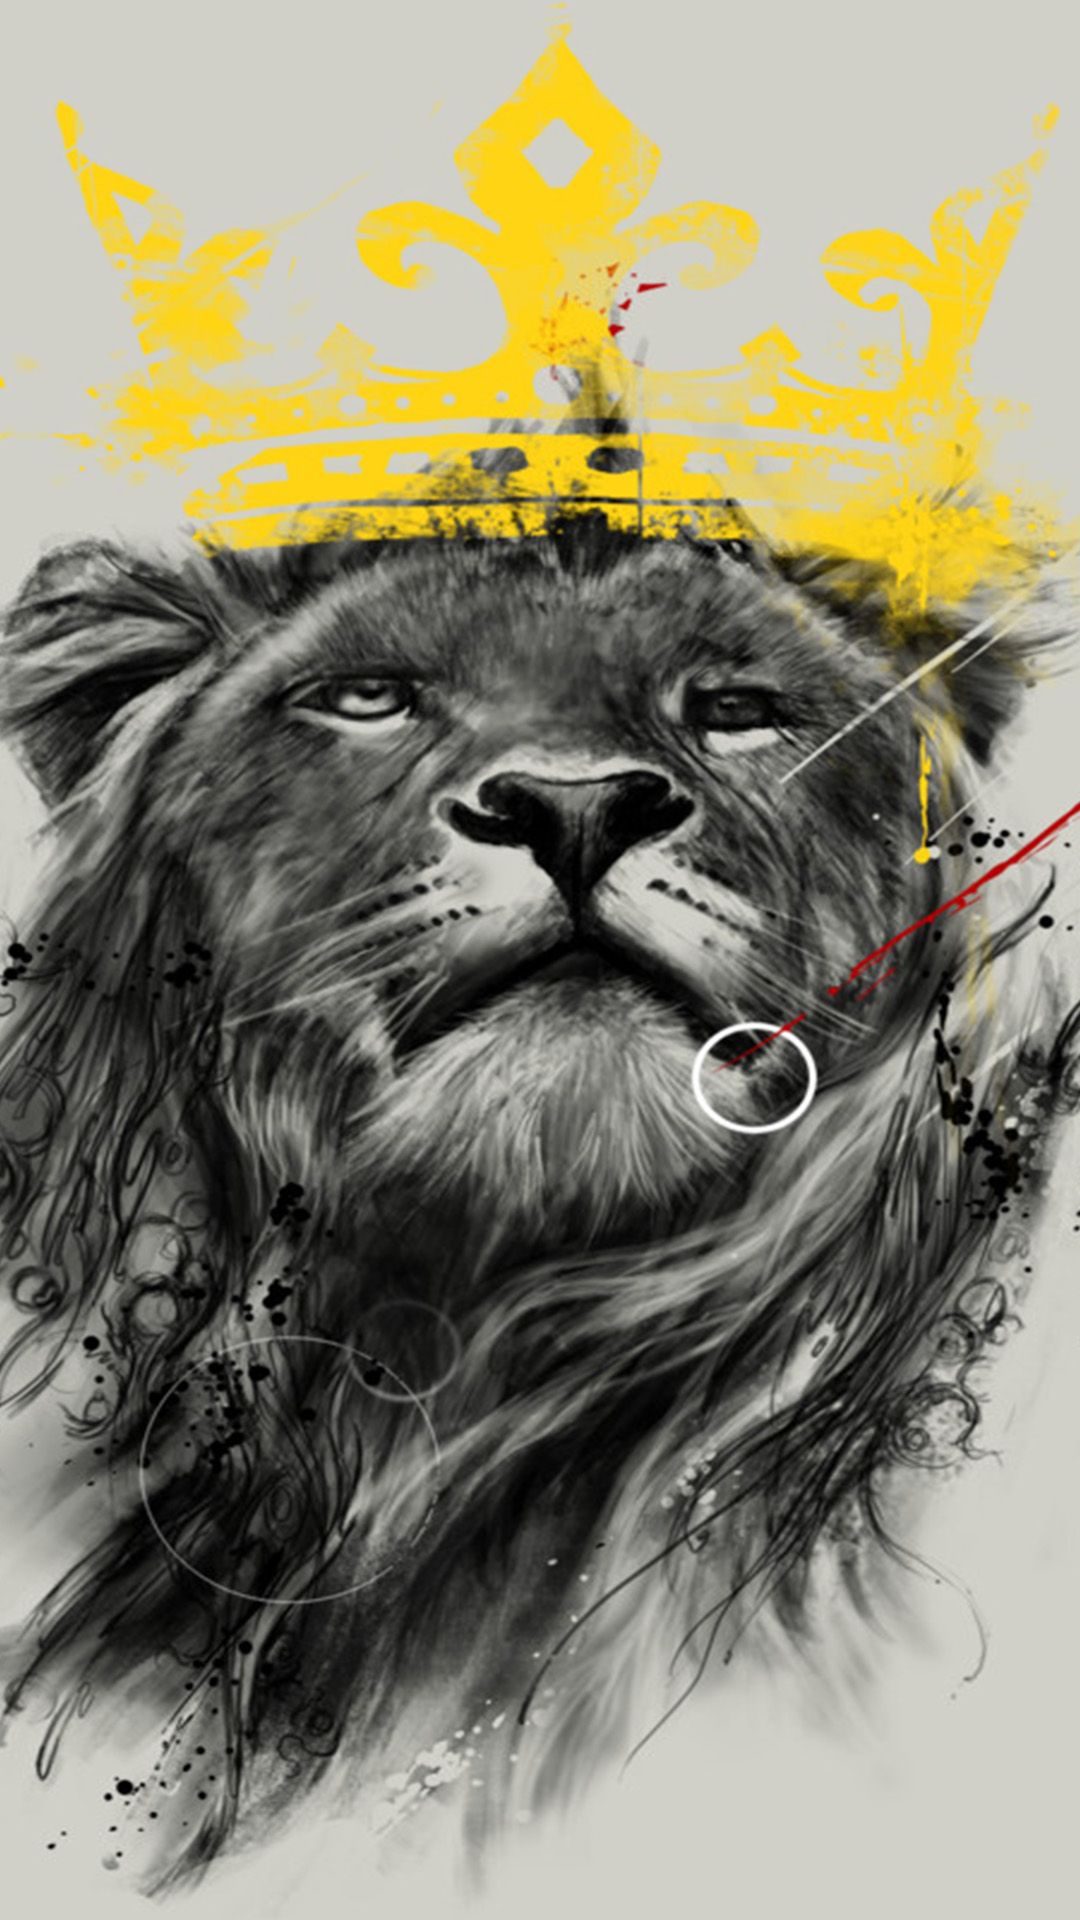 Lion king illustration htc one wallpaper. Lion art, Lion live wallpaper, Lion image